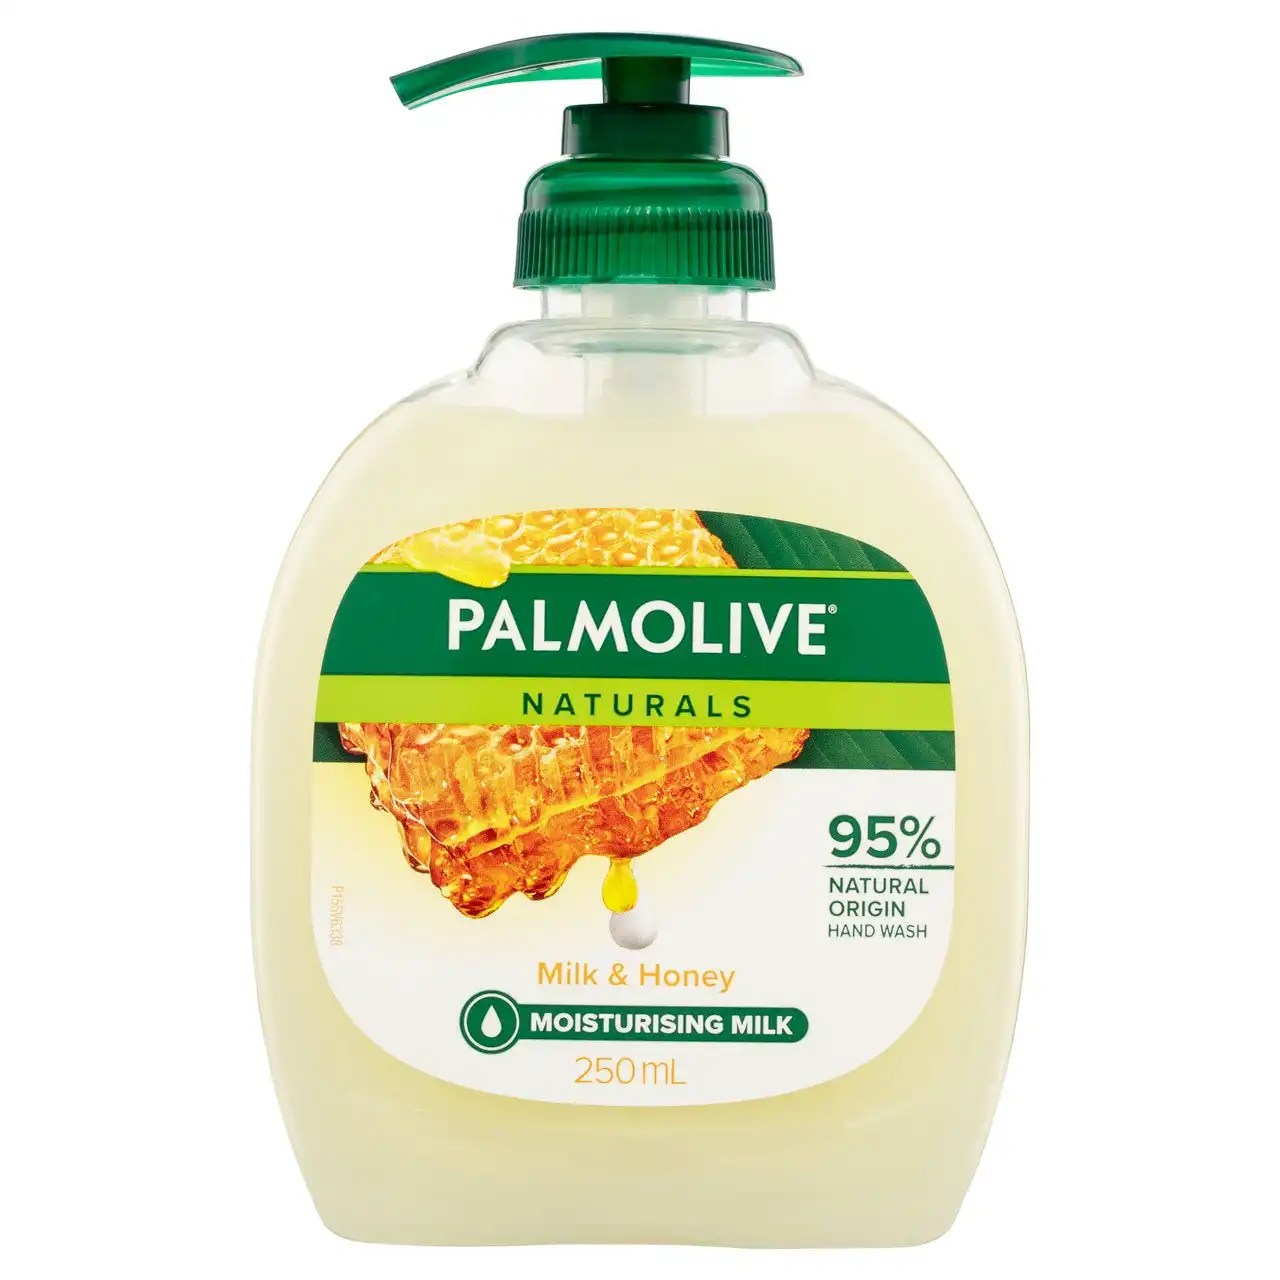 Palmolive Naturals Liquid Hand Wash Soap, 250mL, Milk & Honey Pump with Moisturising Milk, No Parabens or Phthalates